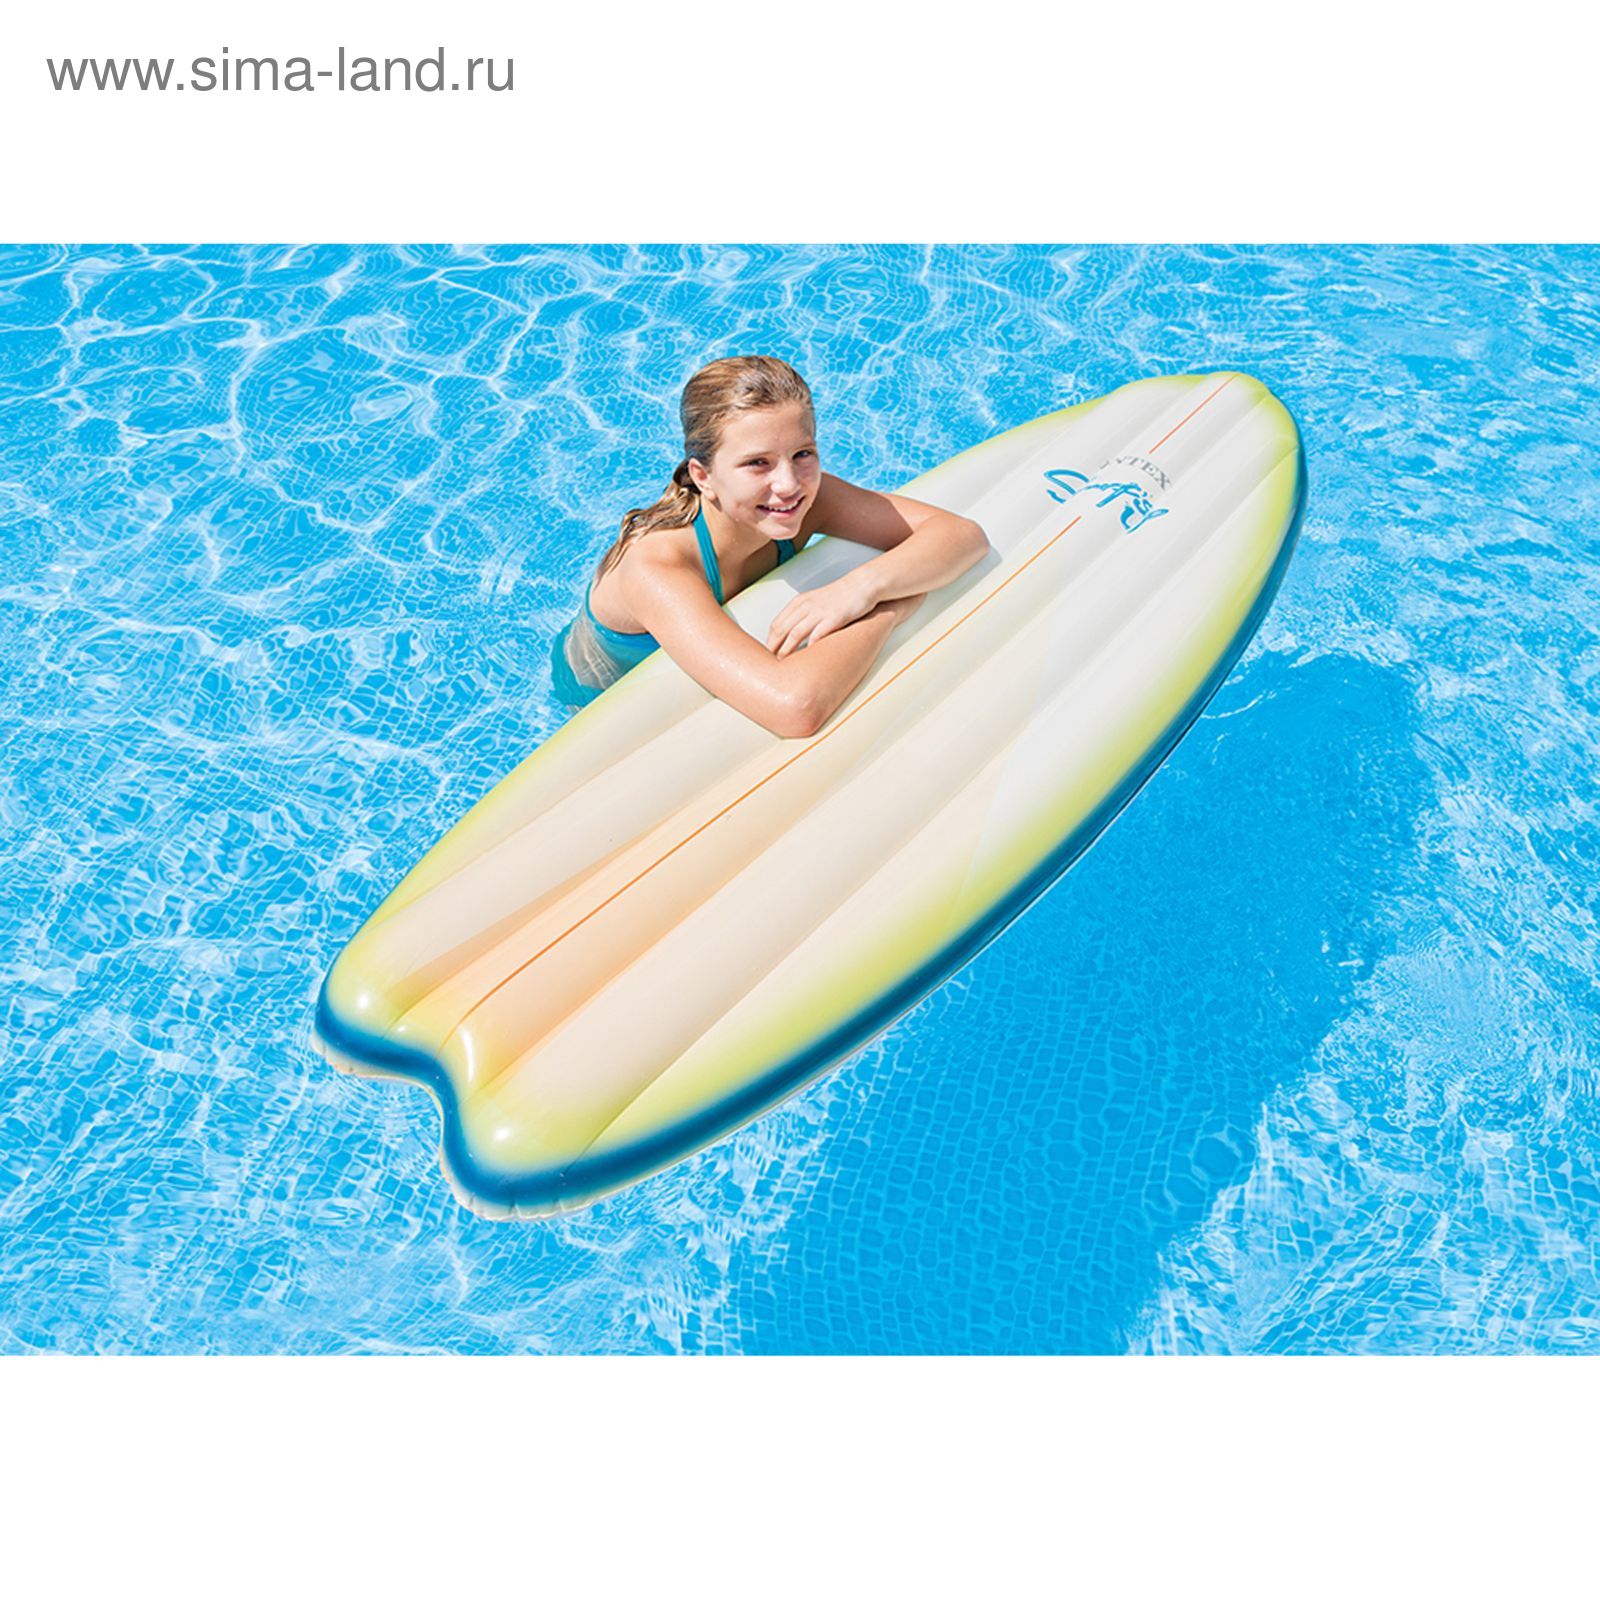 Матрас "Доска для сёрфинга", 178 х 69 см, цвета МИКС